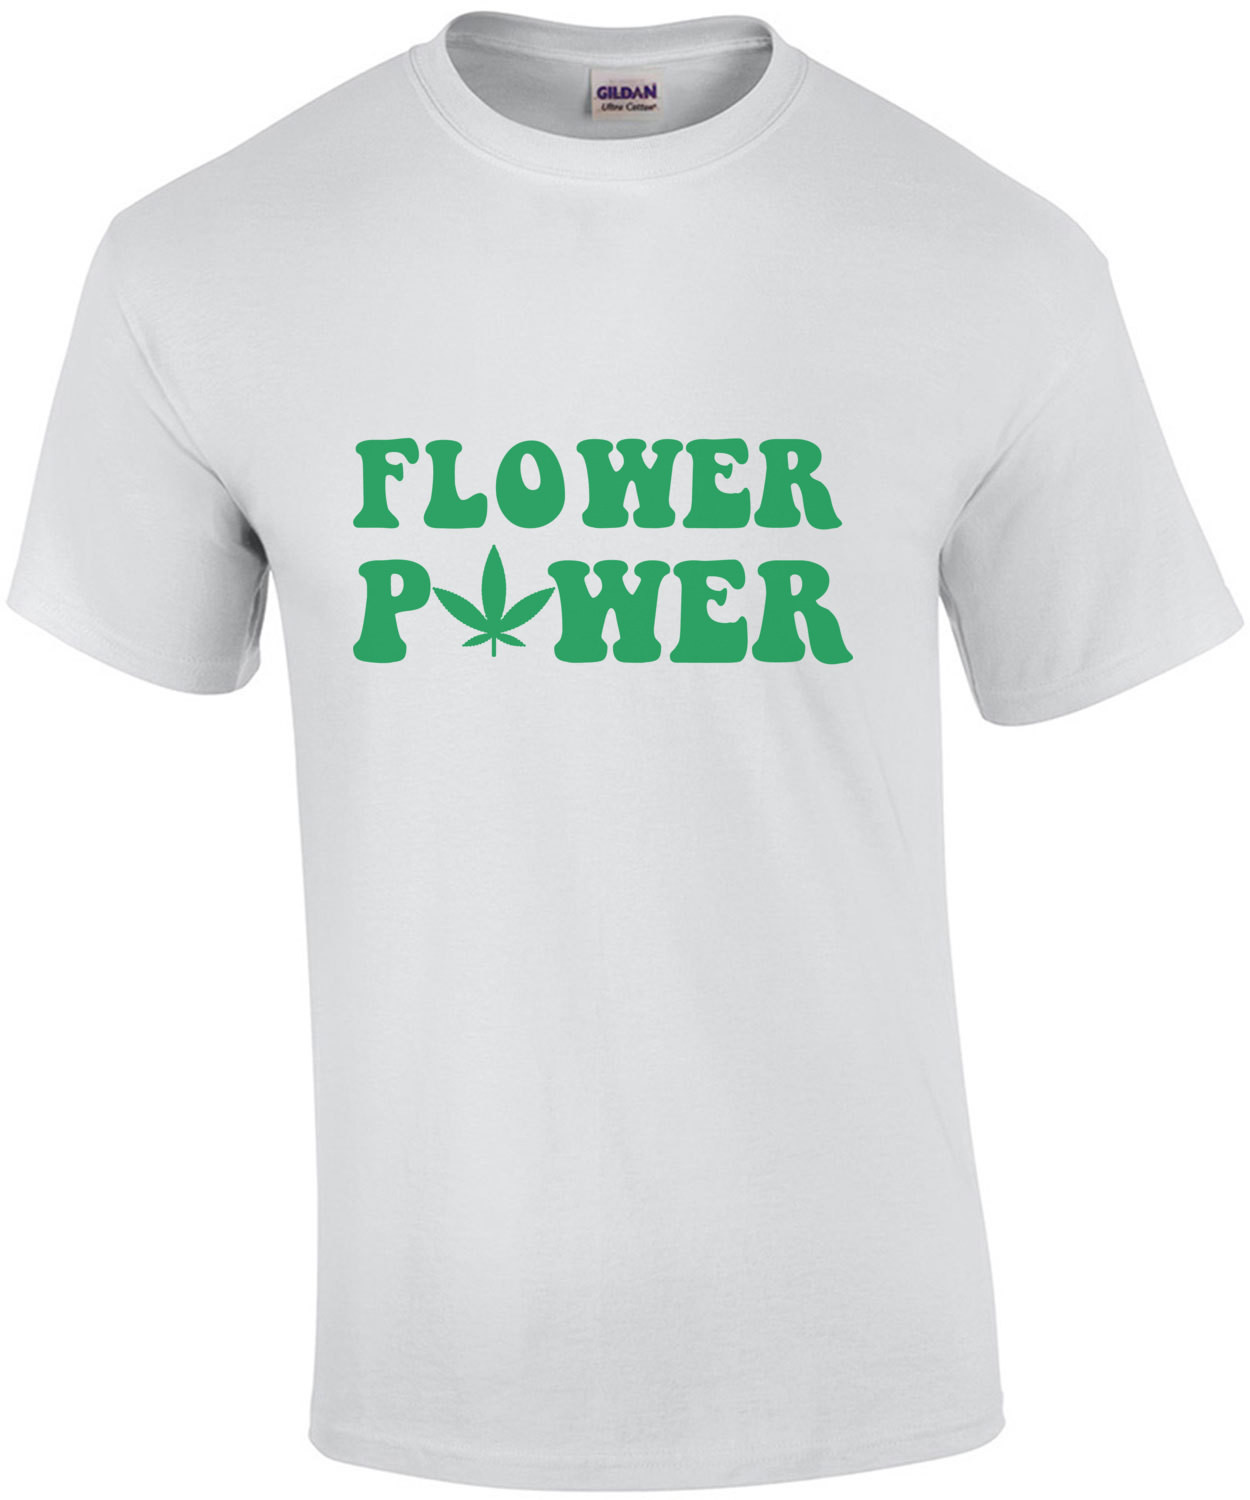 Flower Power - Cool Marijuana Weed T-Shirt